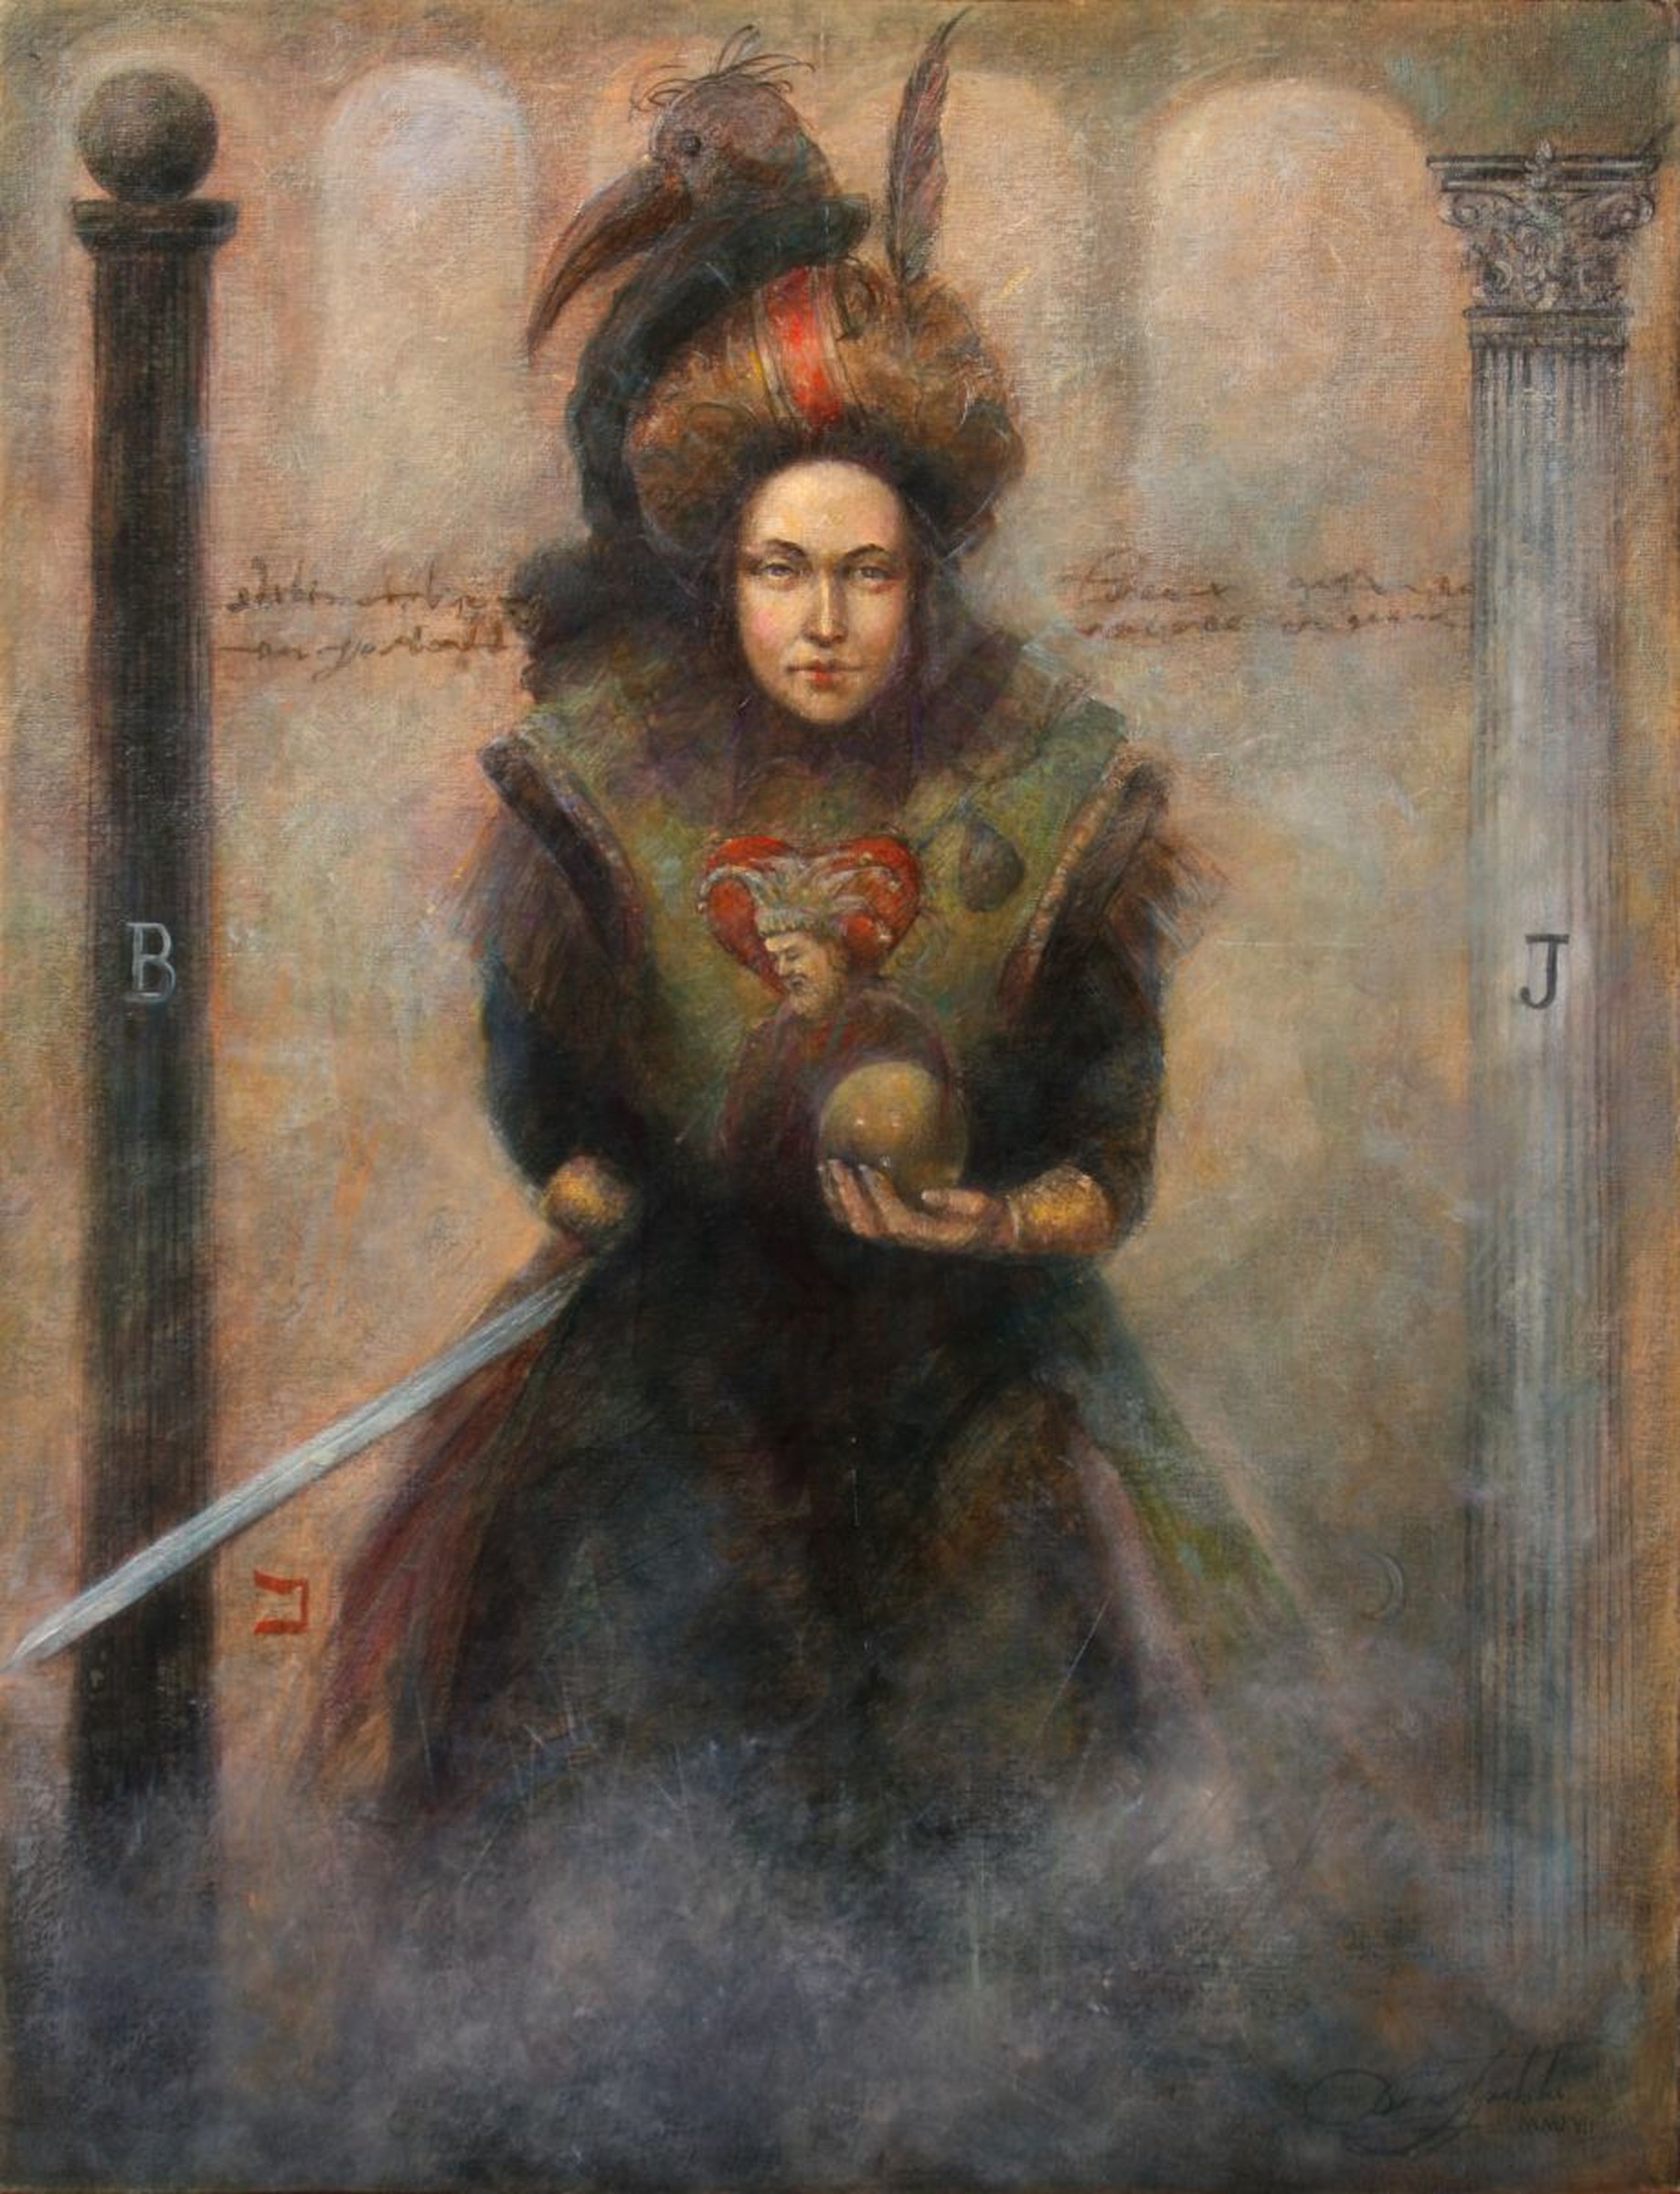 Fine Art - High Priestess - Tarot NO2 - Original Oil Painting on Canvas by artist Darko Topalski